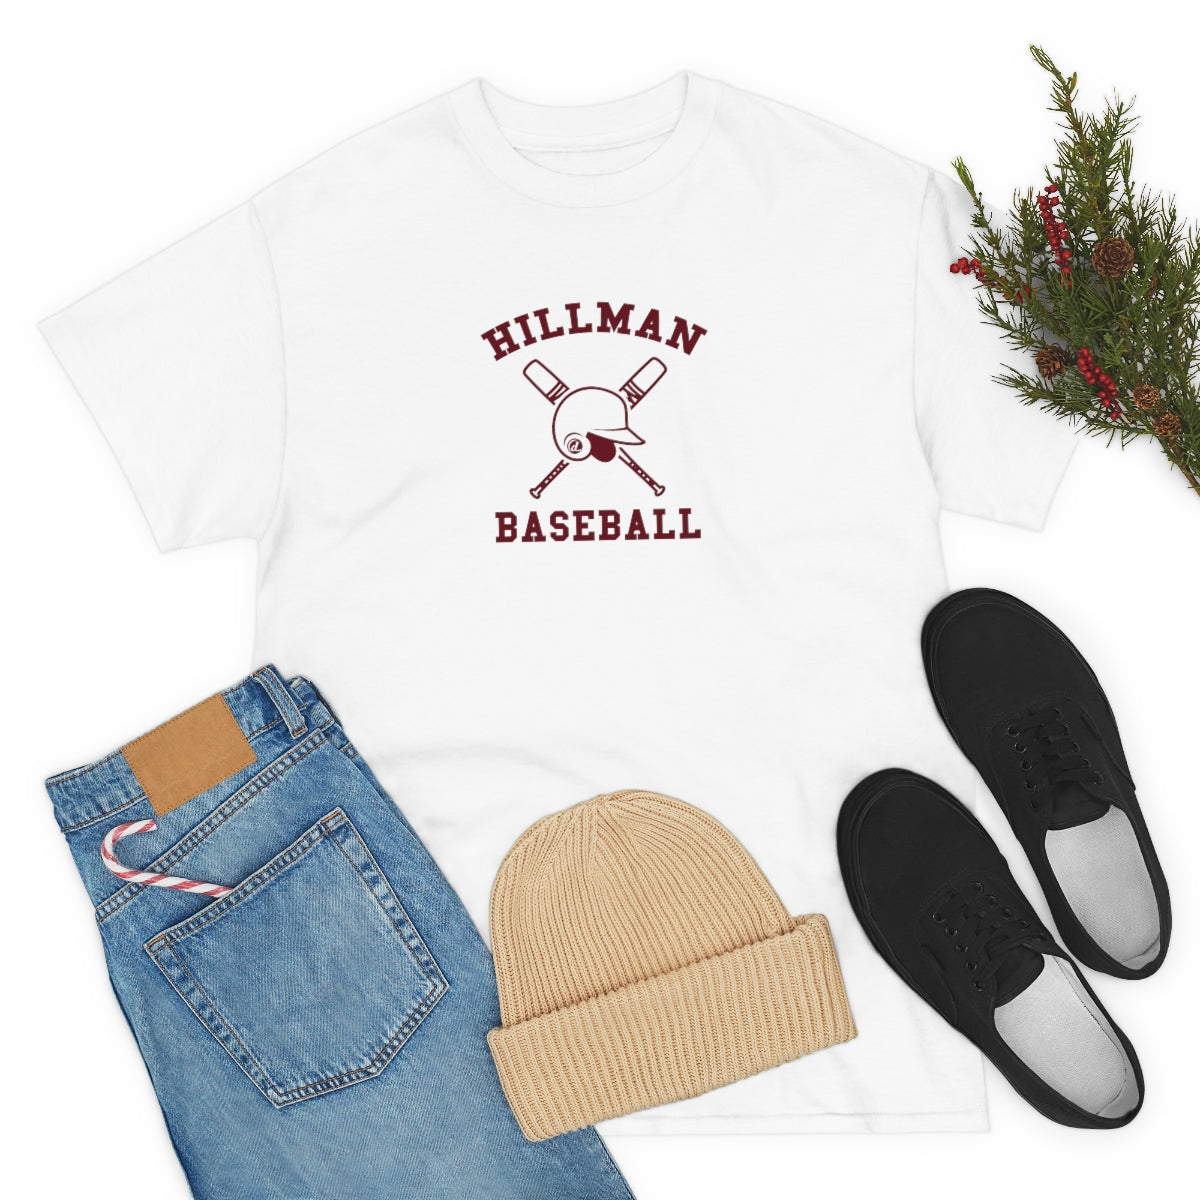 Hillman Baseball: Maroon Lettering Unisex Short Sleeve Tee